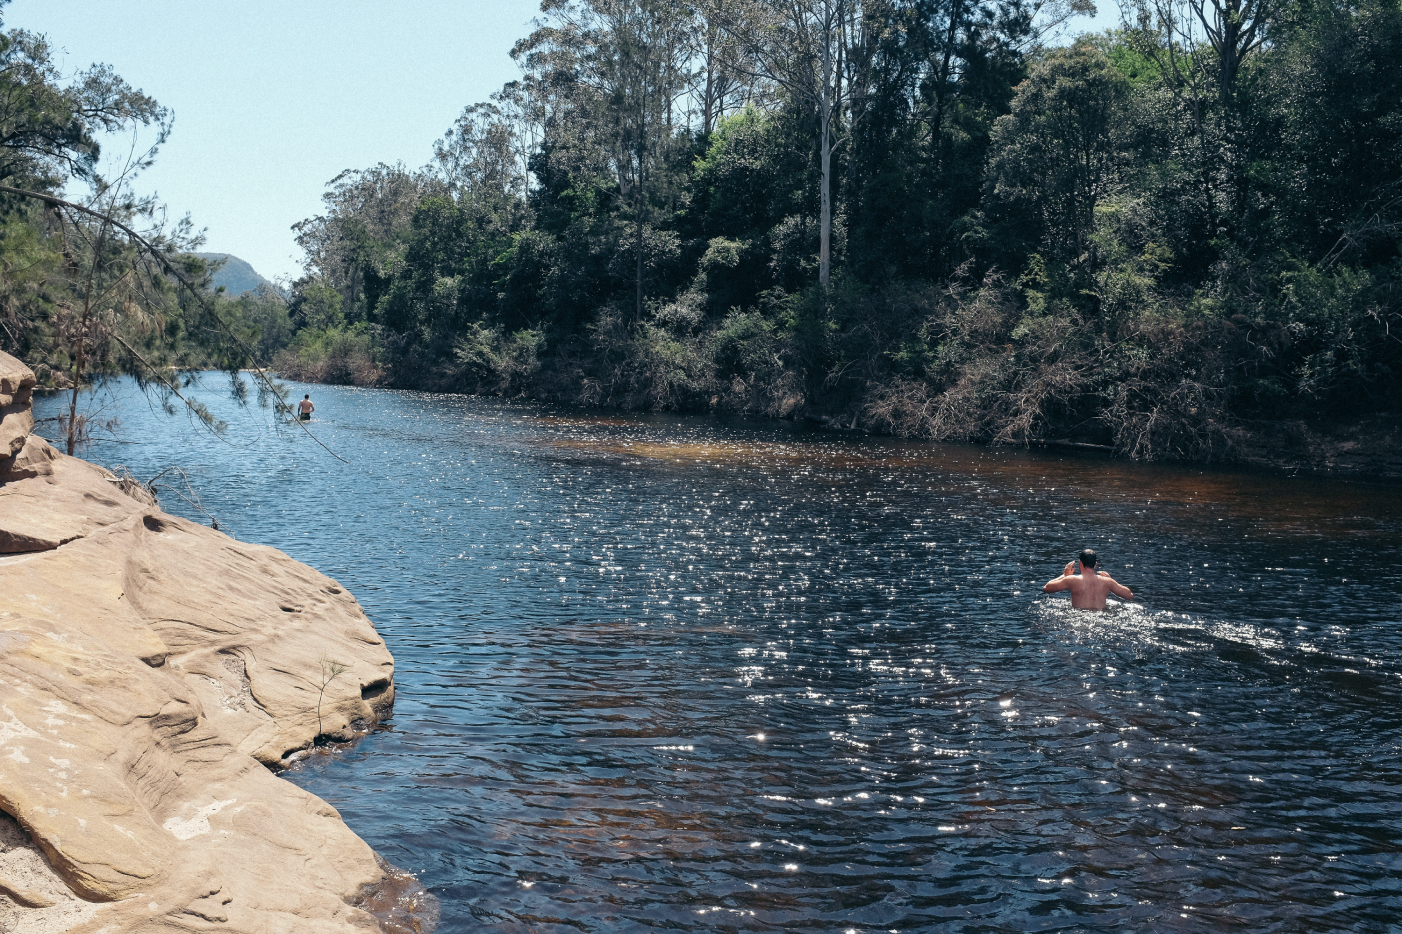 A person swimming in a river